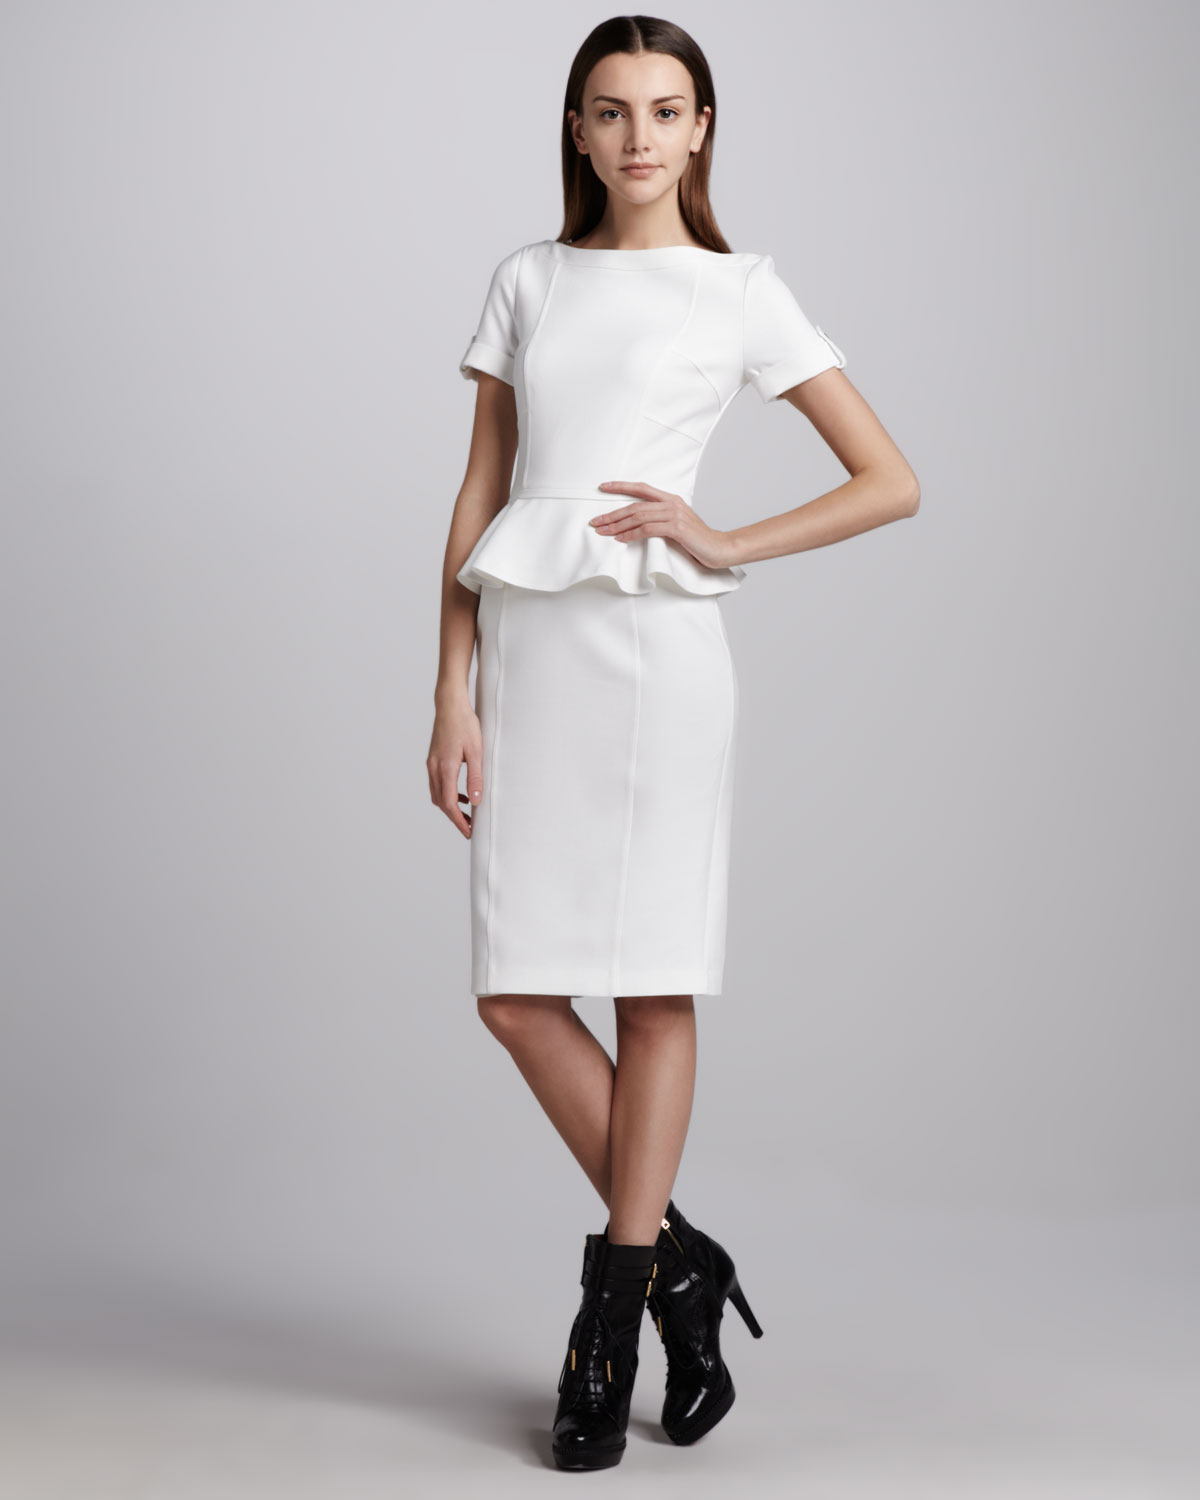 burberry white dress